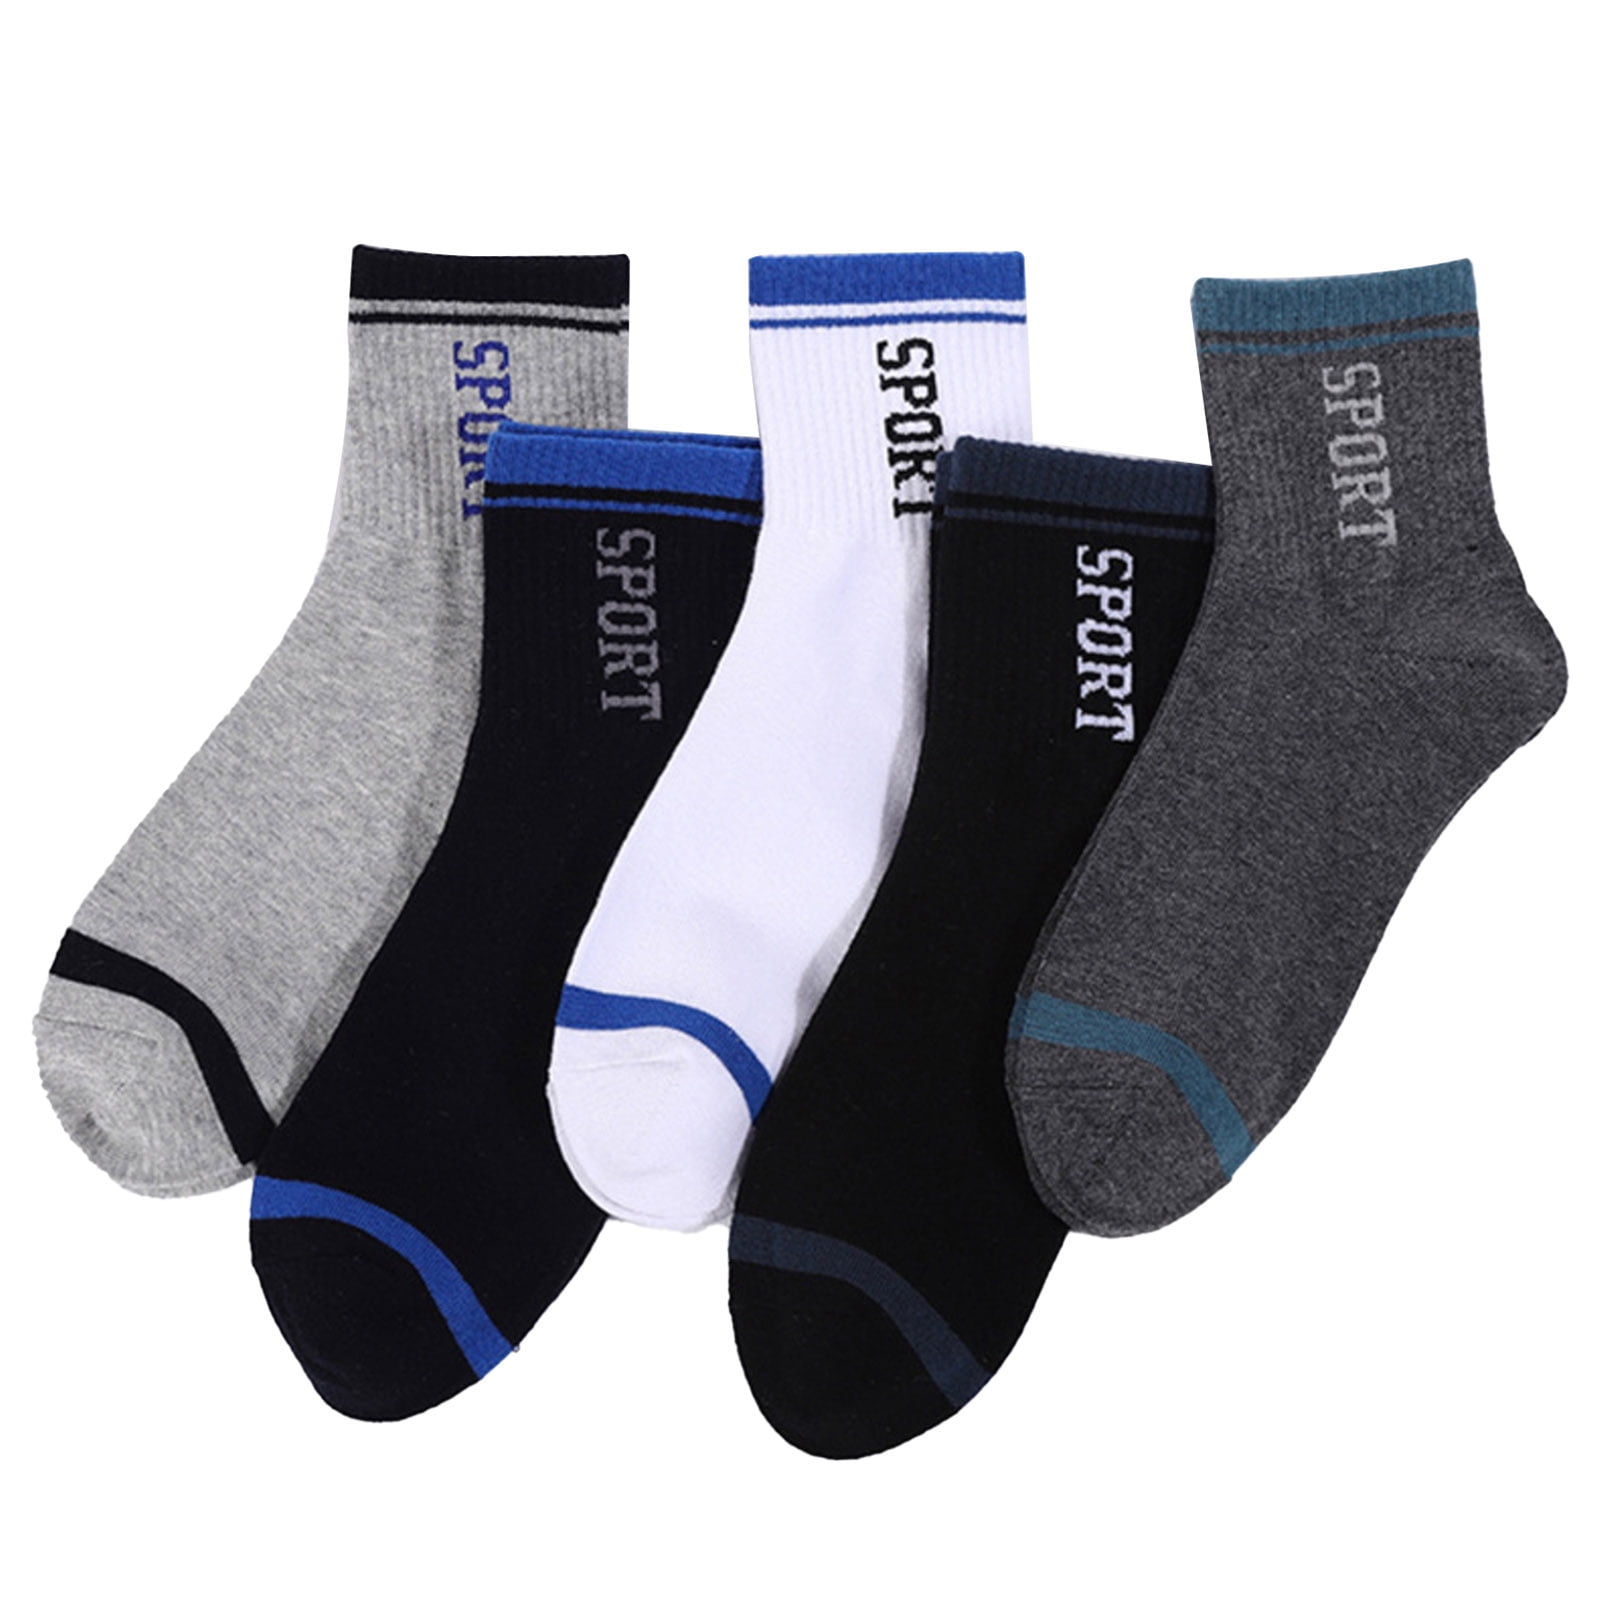 12 Pairs Boys Grey School Cotton Socks Shoe Sizes 6-5 